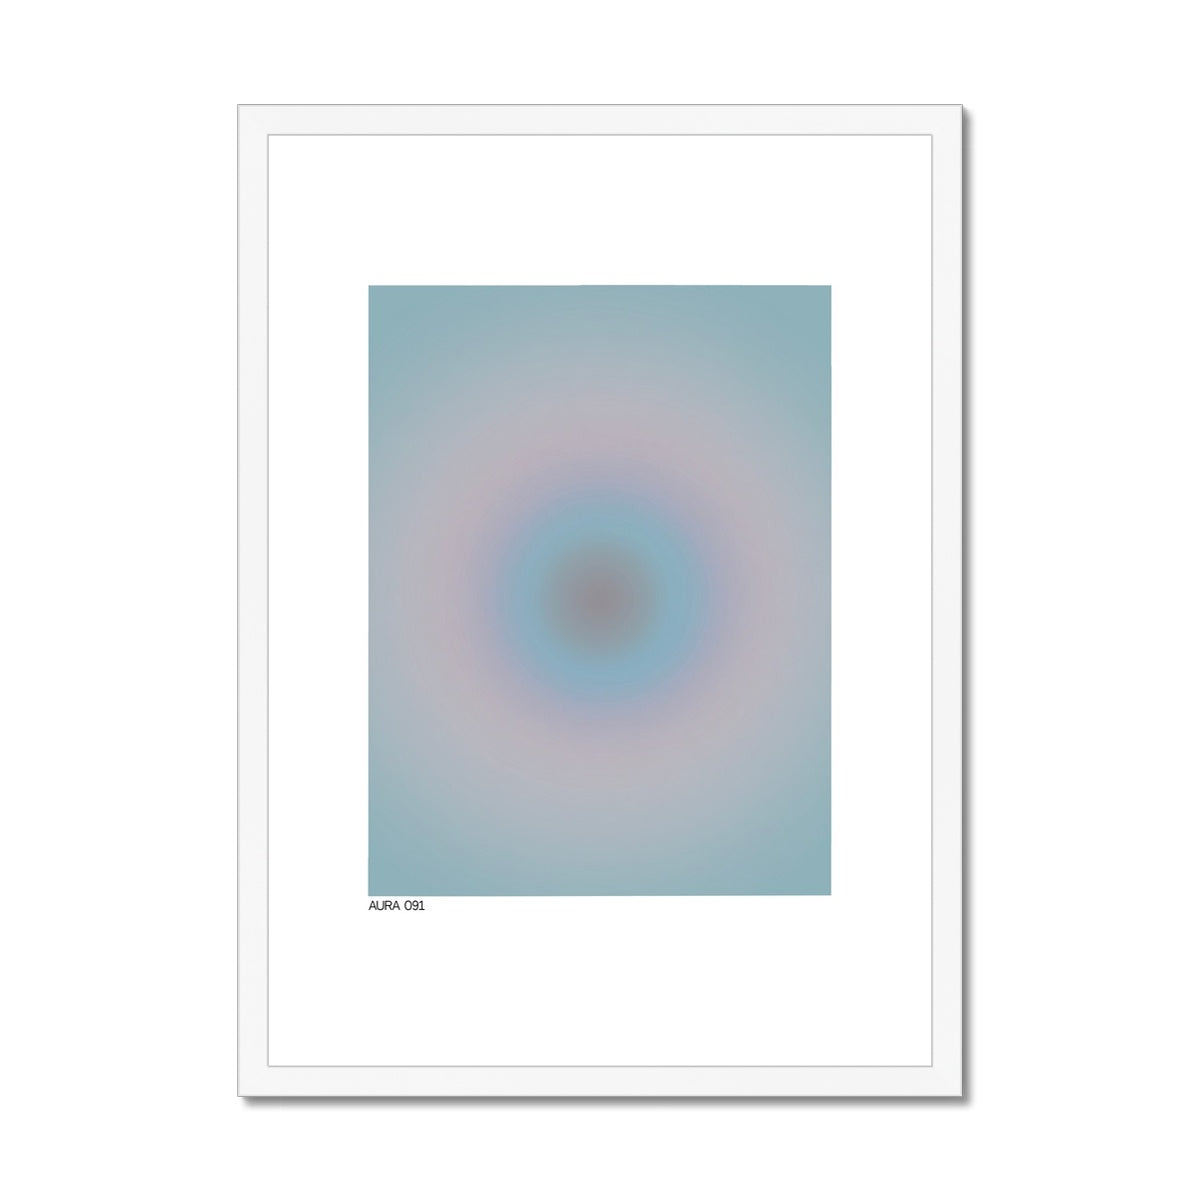 aura 091 Framed & Mounted Print